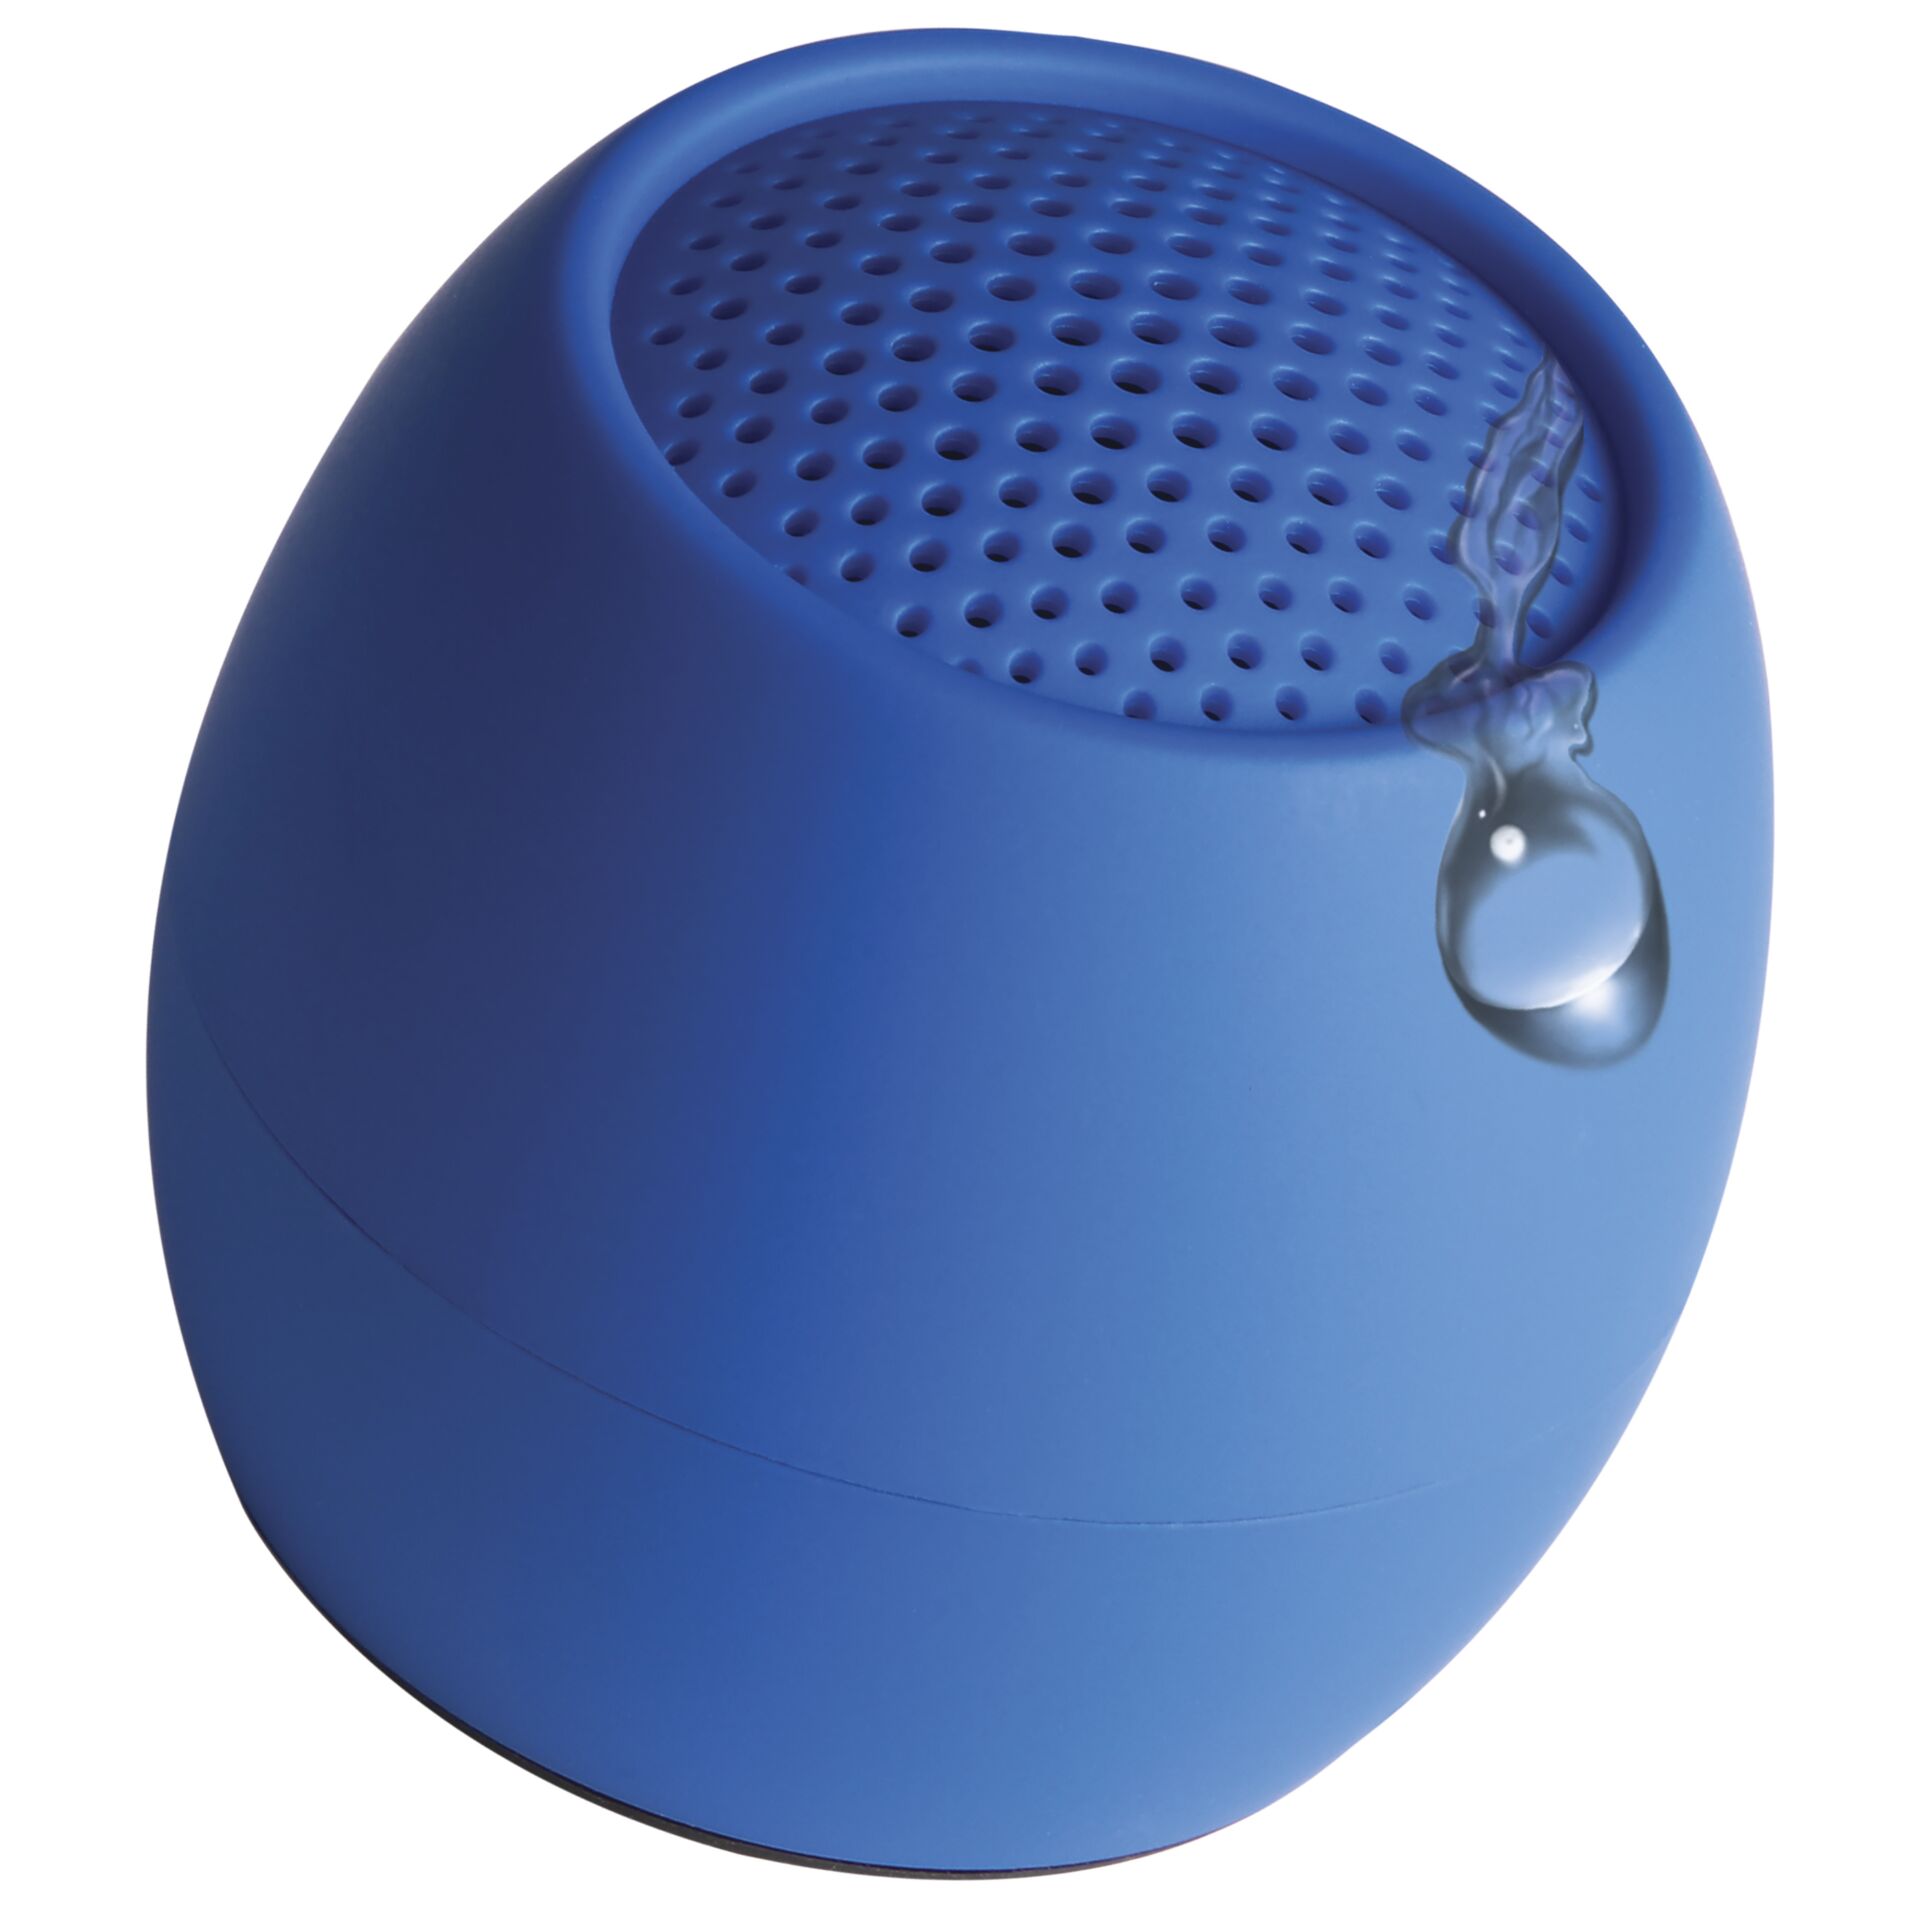 Boompods Zero Speaker Tragbarer Mono-Lautsprecher Blau 3 W